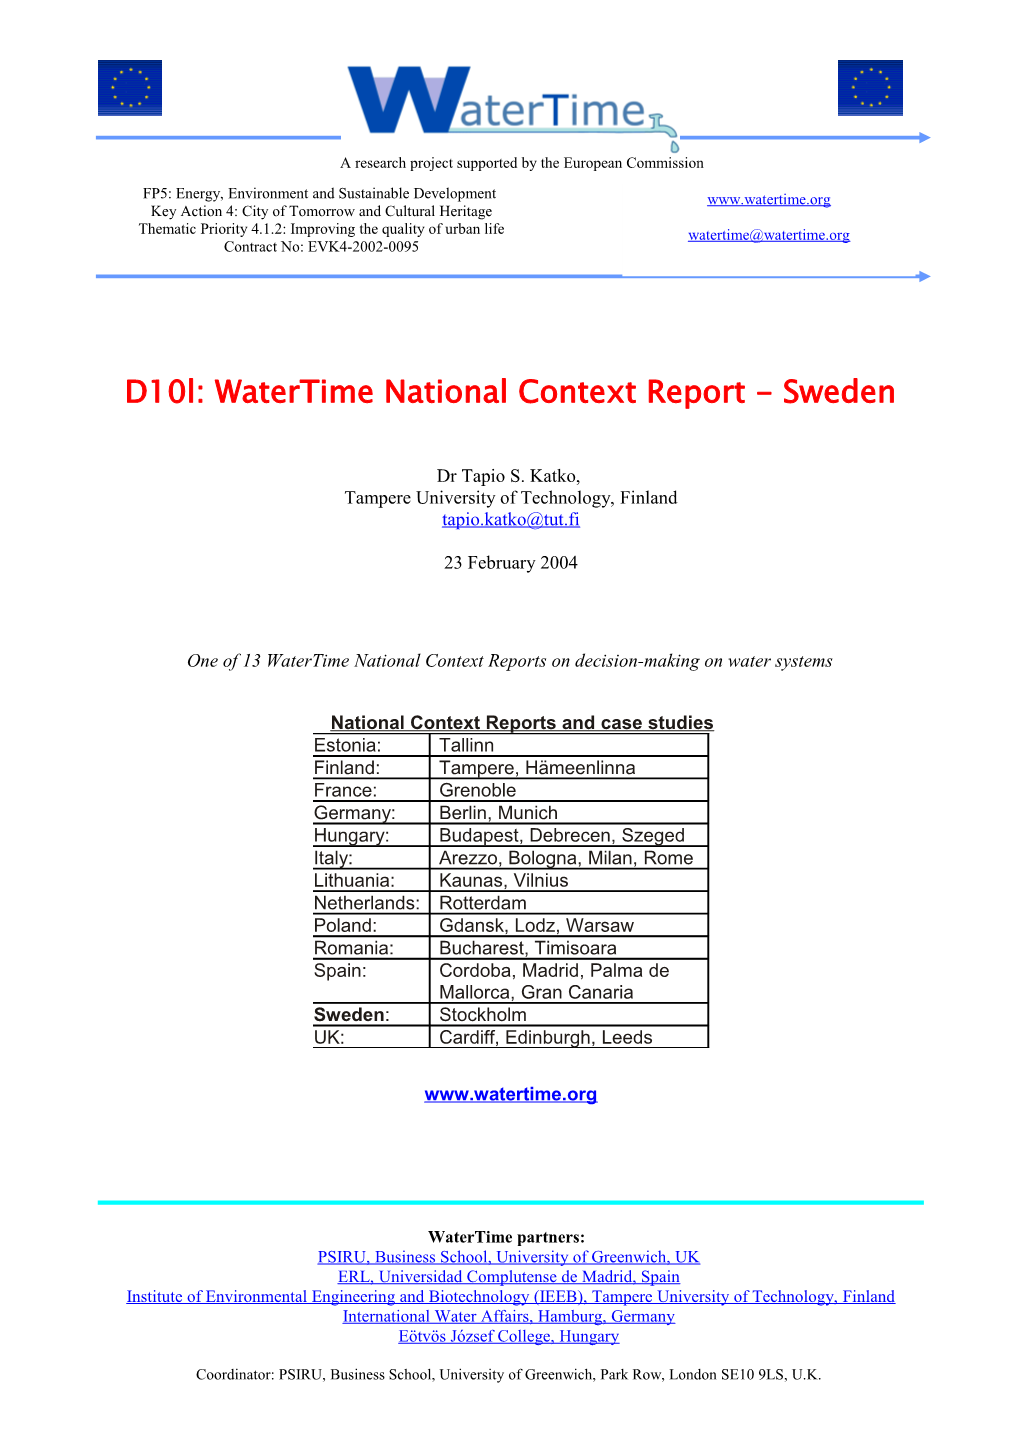 D10l: Watertime National Context Report - Sweden